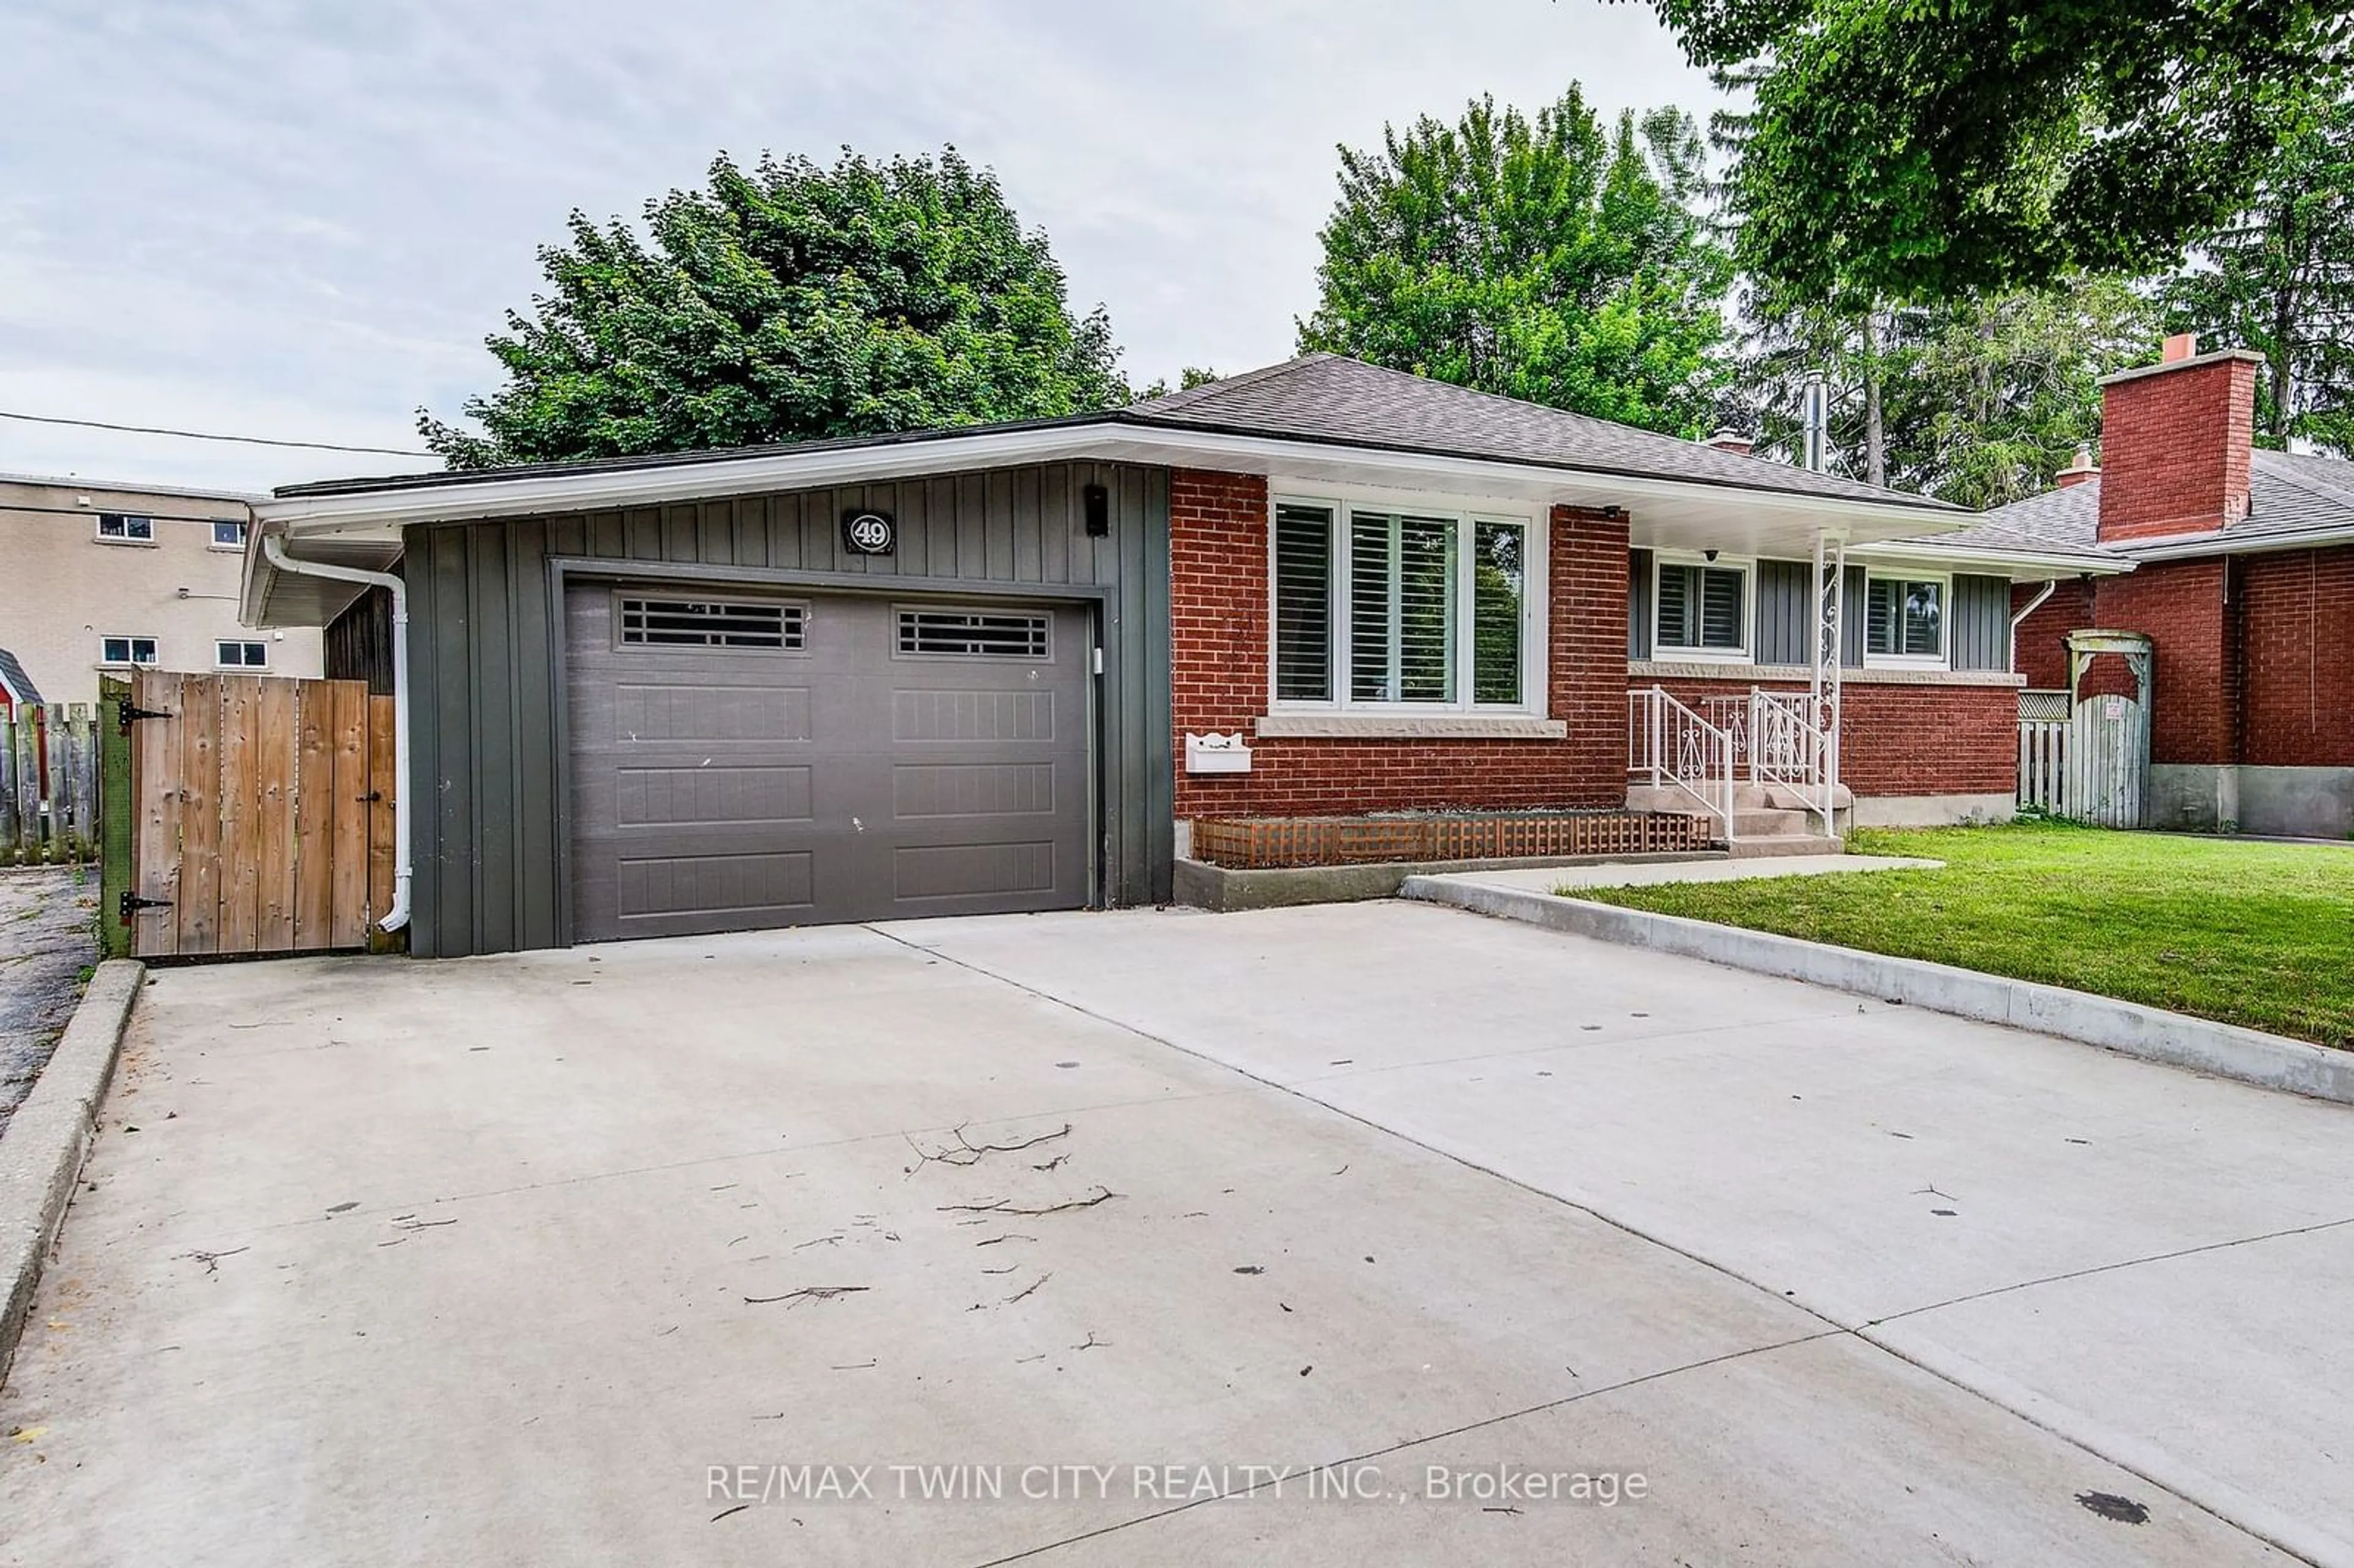 Home with brick exterior material for 49 Vardon Ave, Cambridge Ontario N1R 1R9